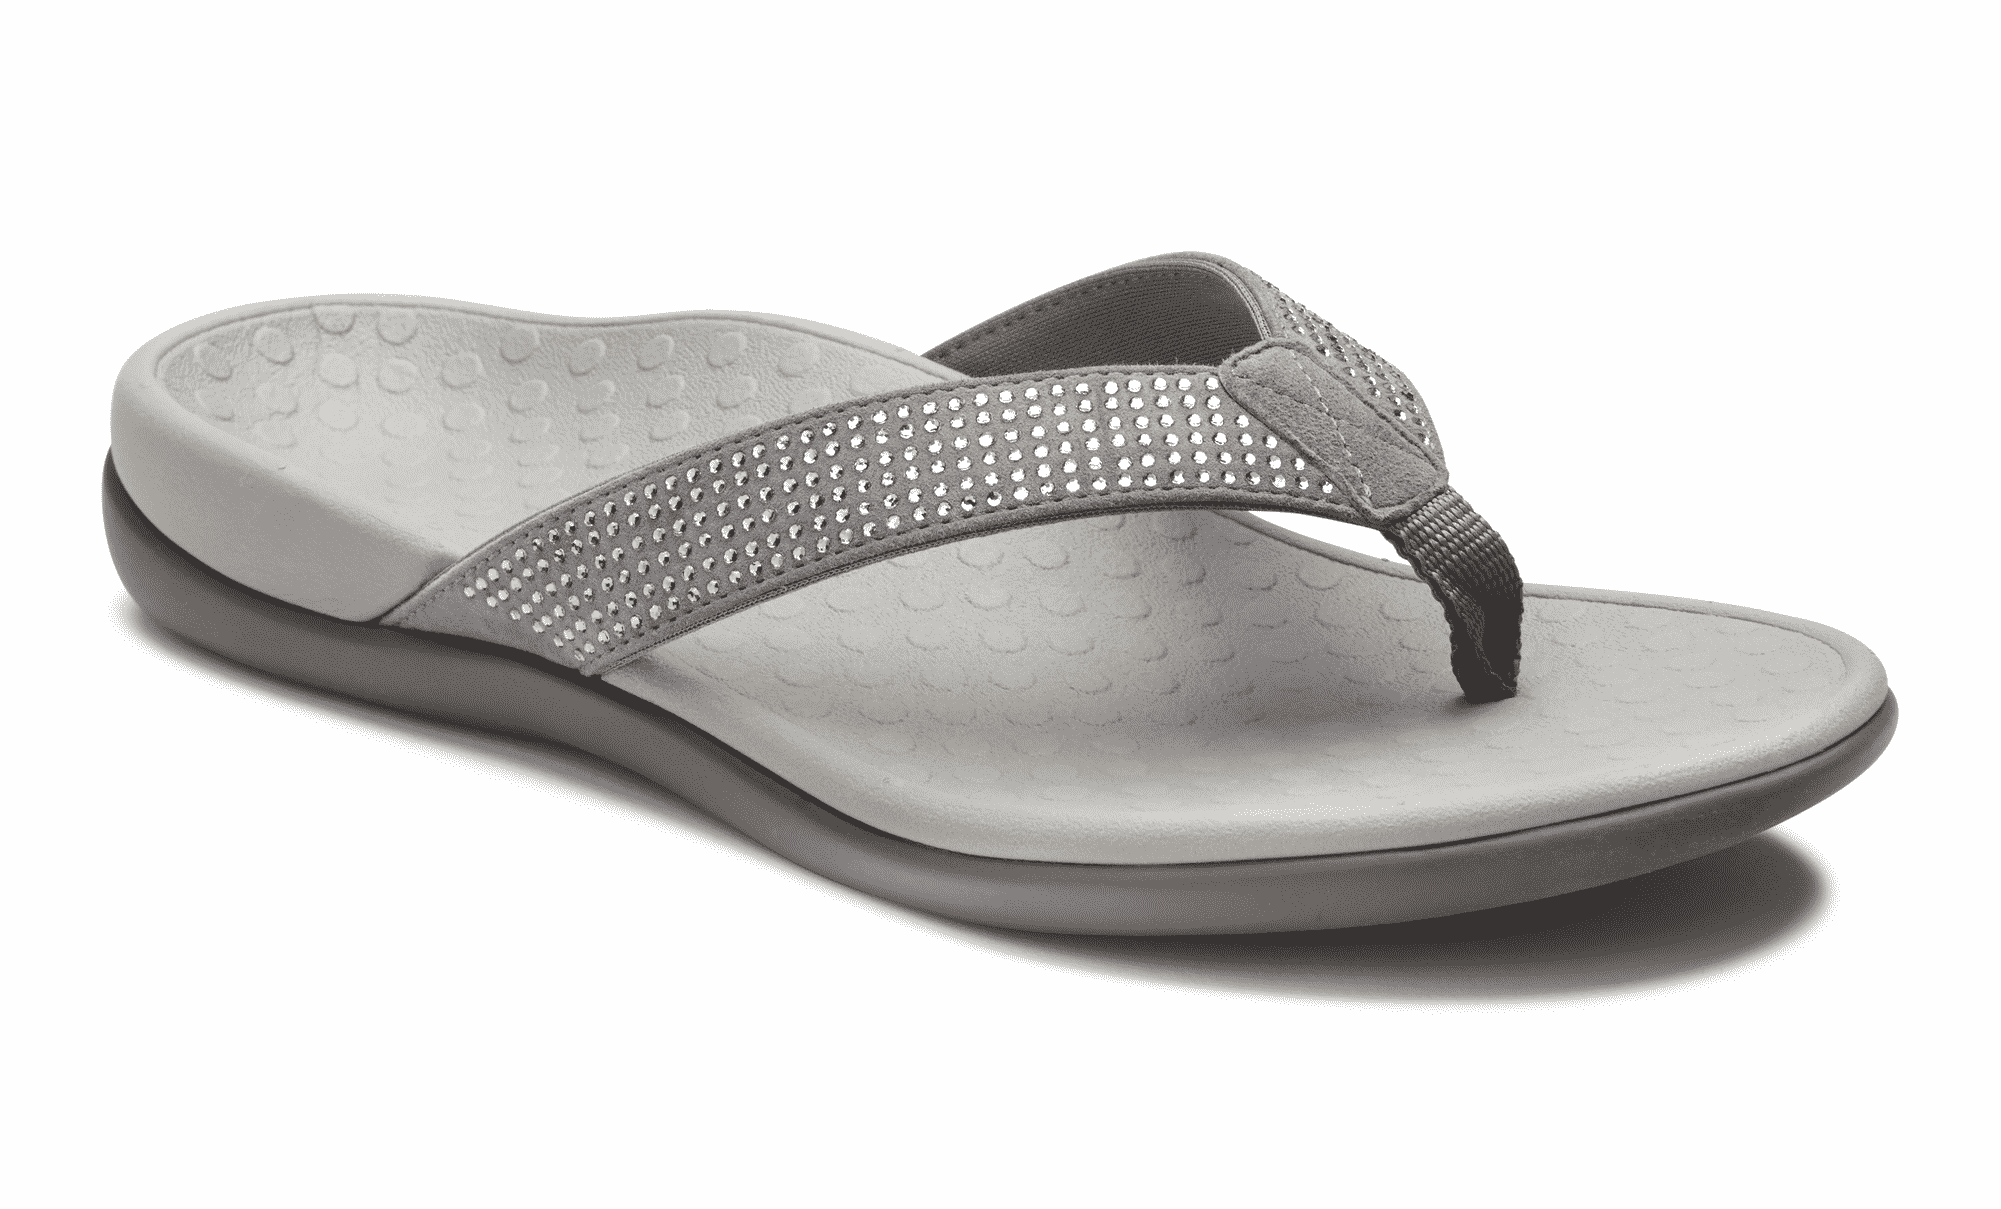 Sandals | The Bone Store | Vionic | Spenco | Orthotic Footwear